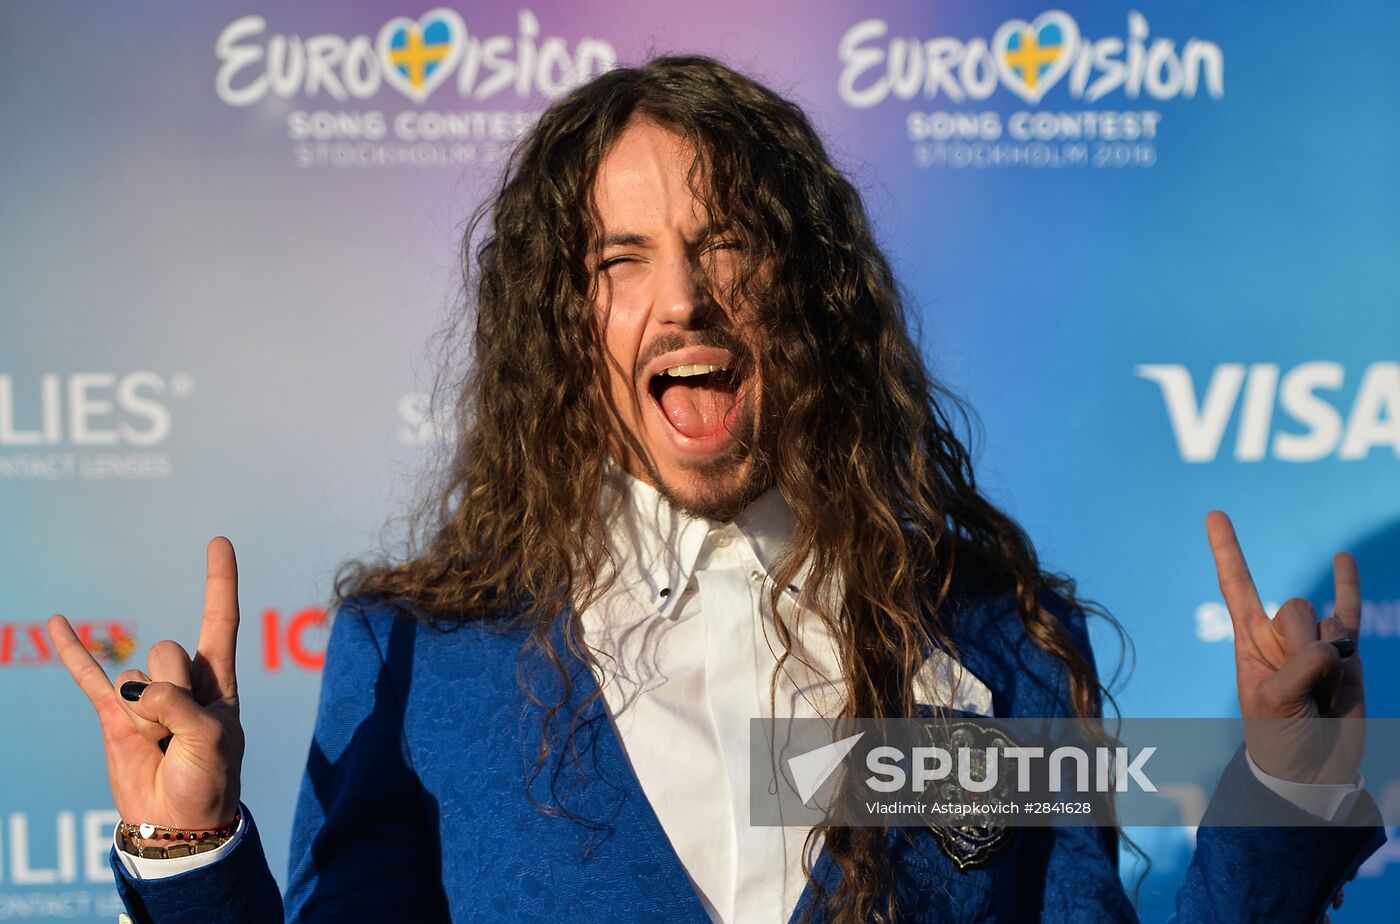 Eurovision Song Contest 2016 kicks off